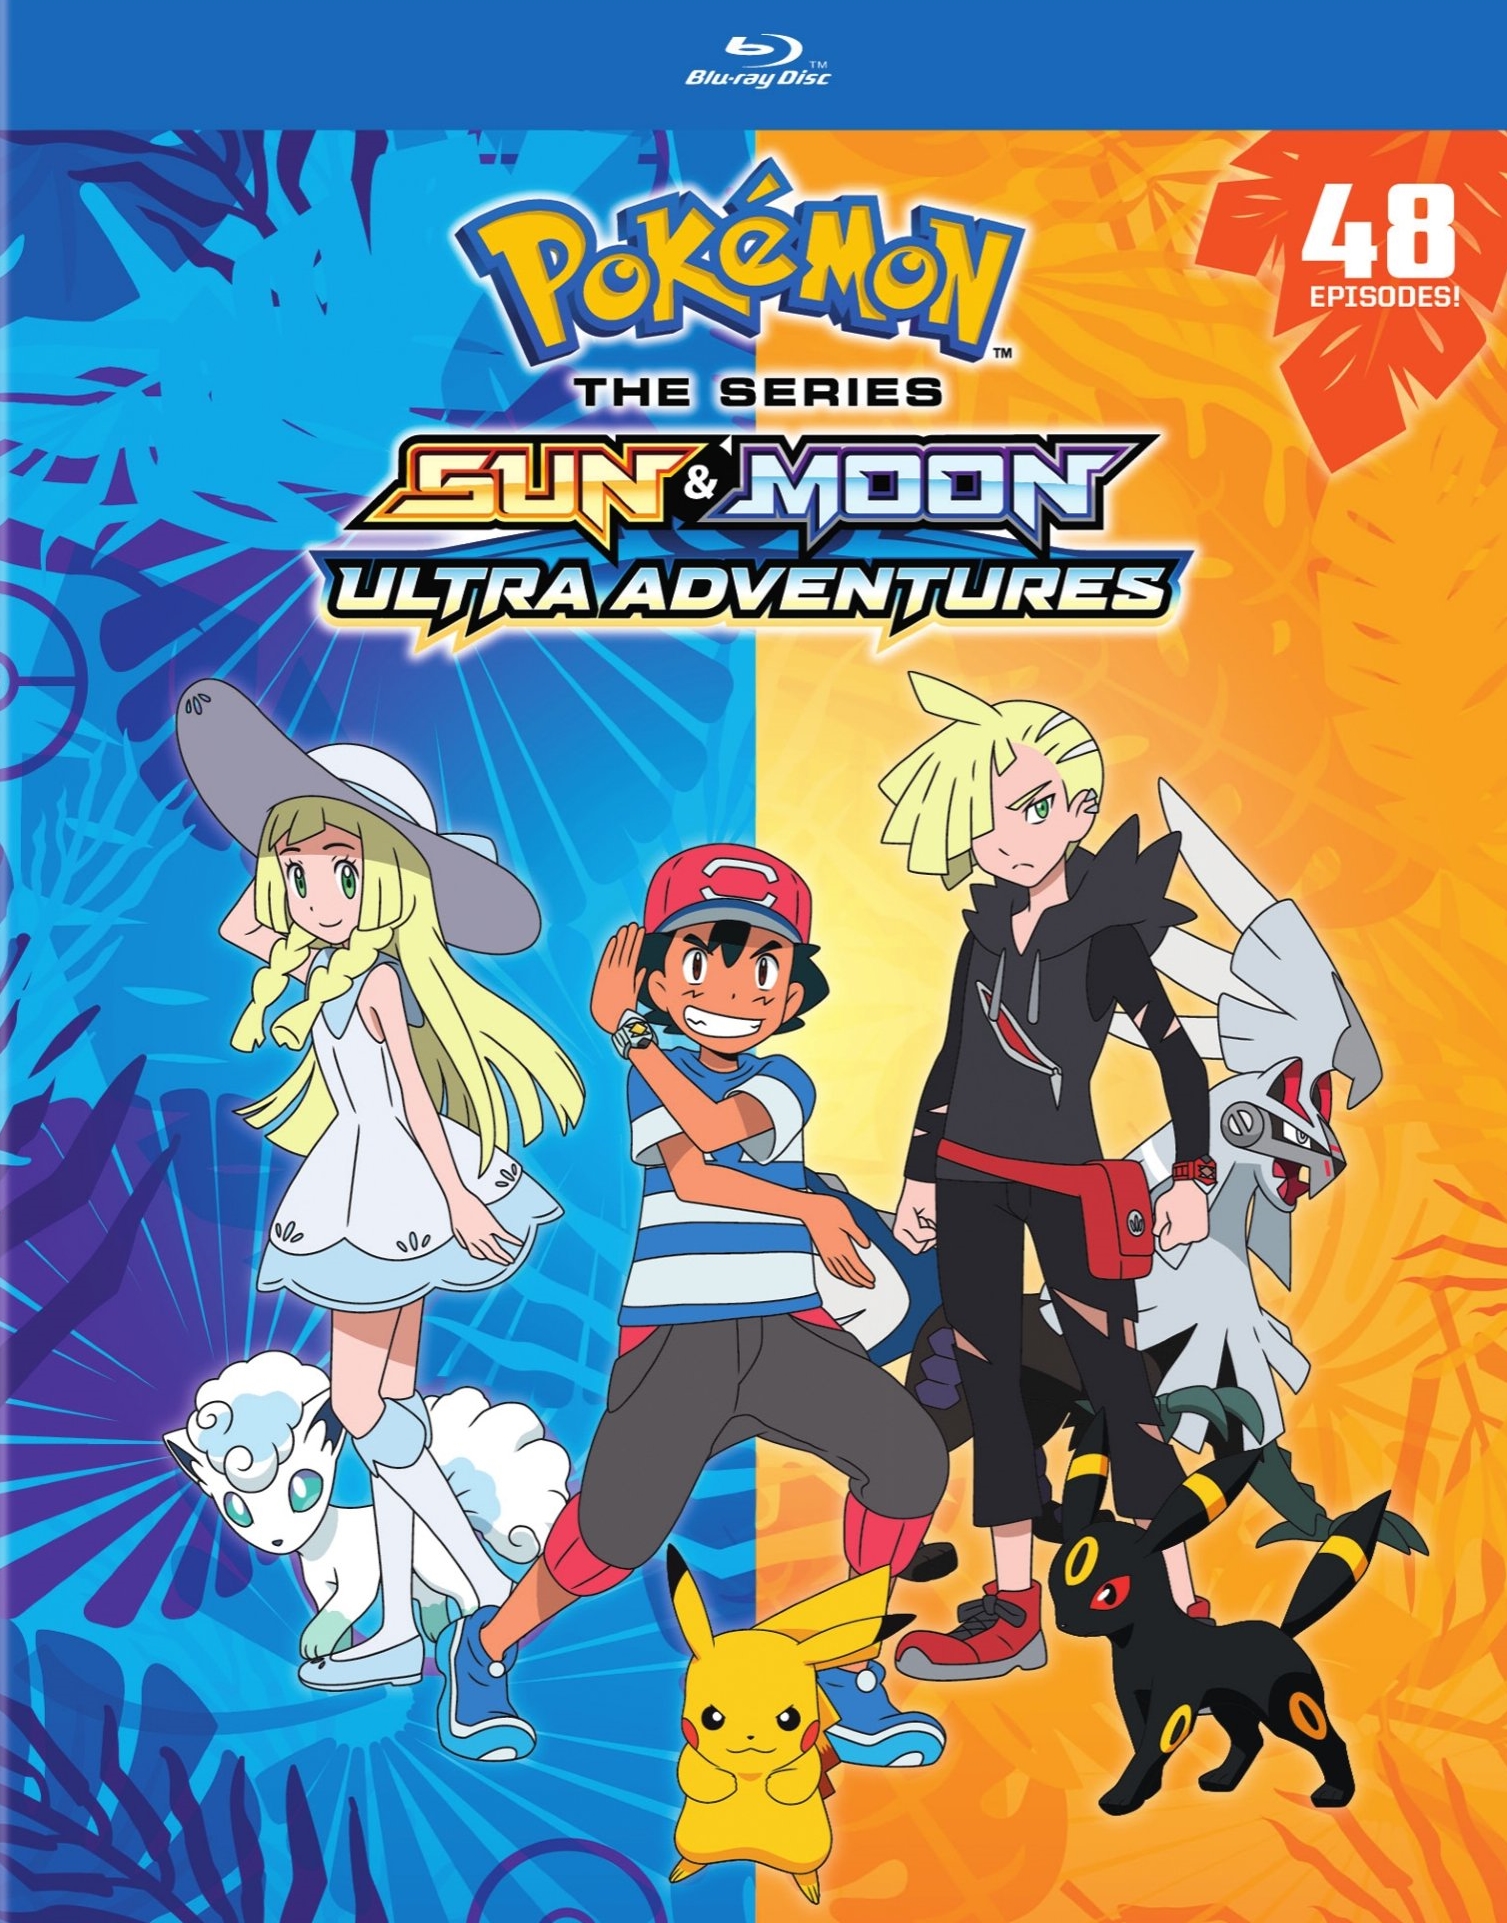 Pokémon Ultra Sun and Pokémon Ultra Moon Edition: The Official National  Pokédex 9780744019360